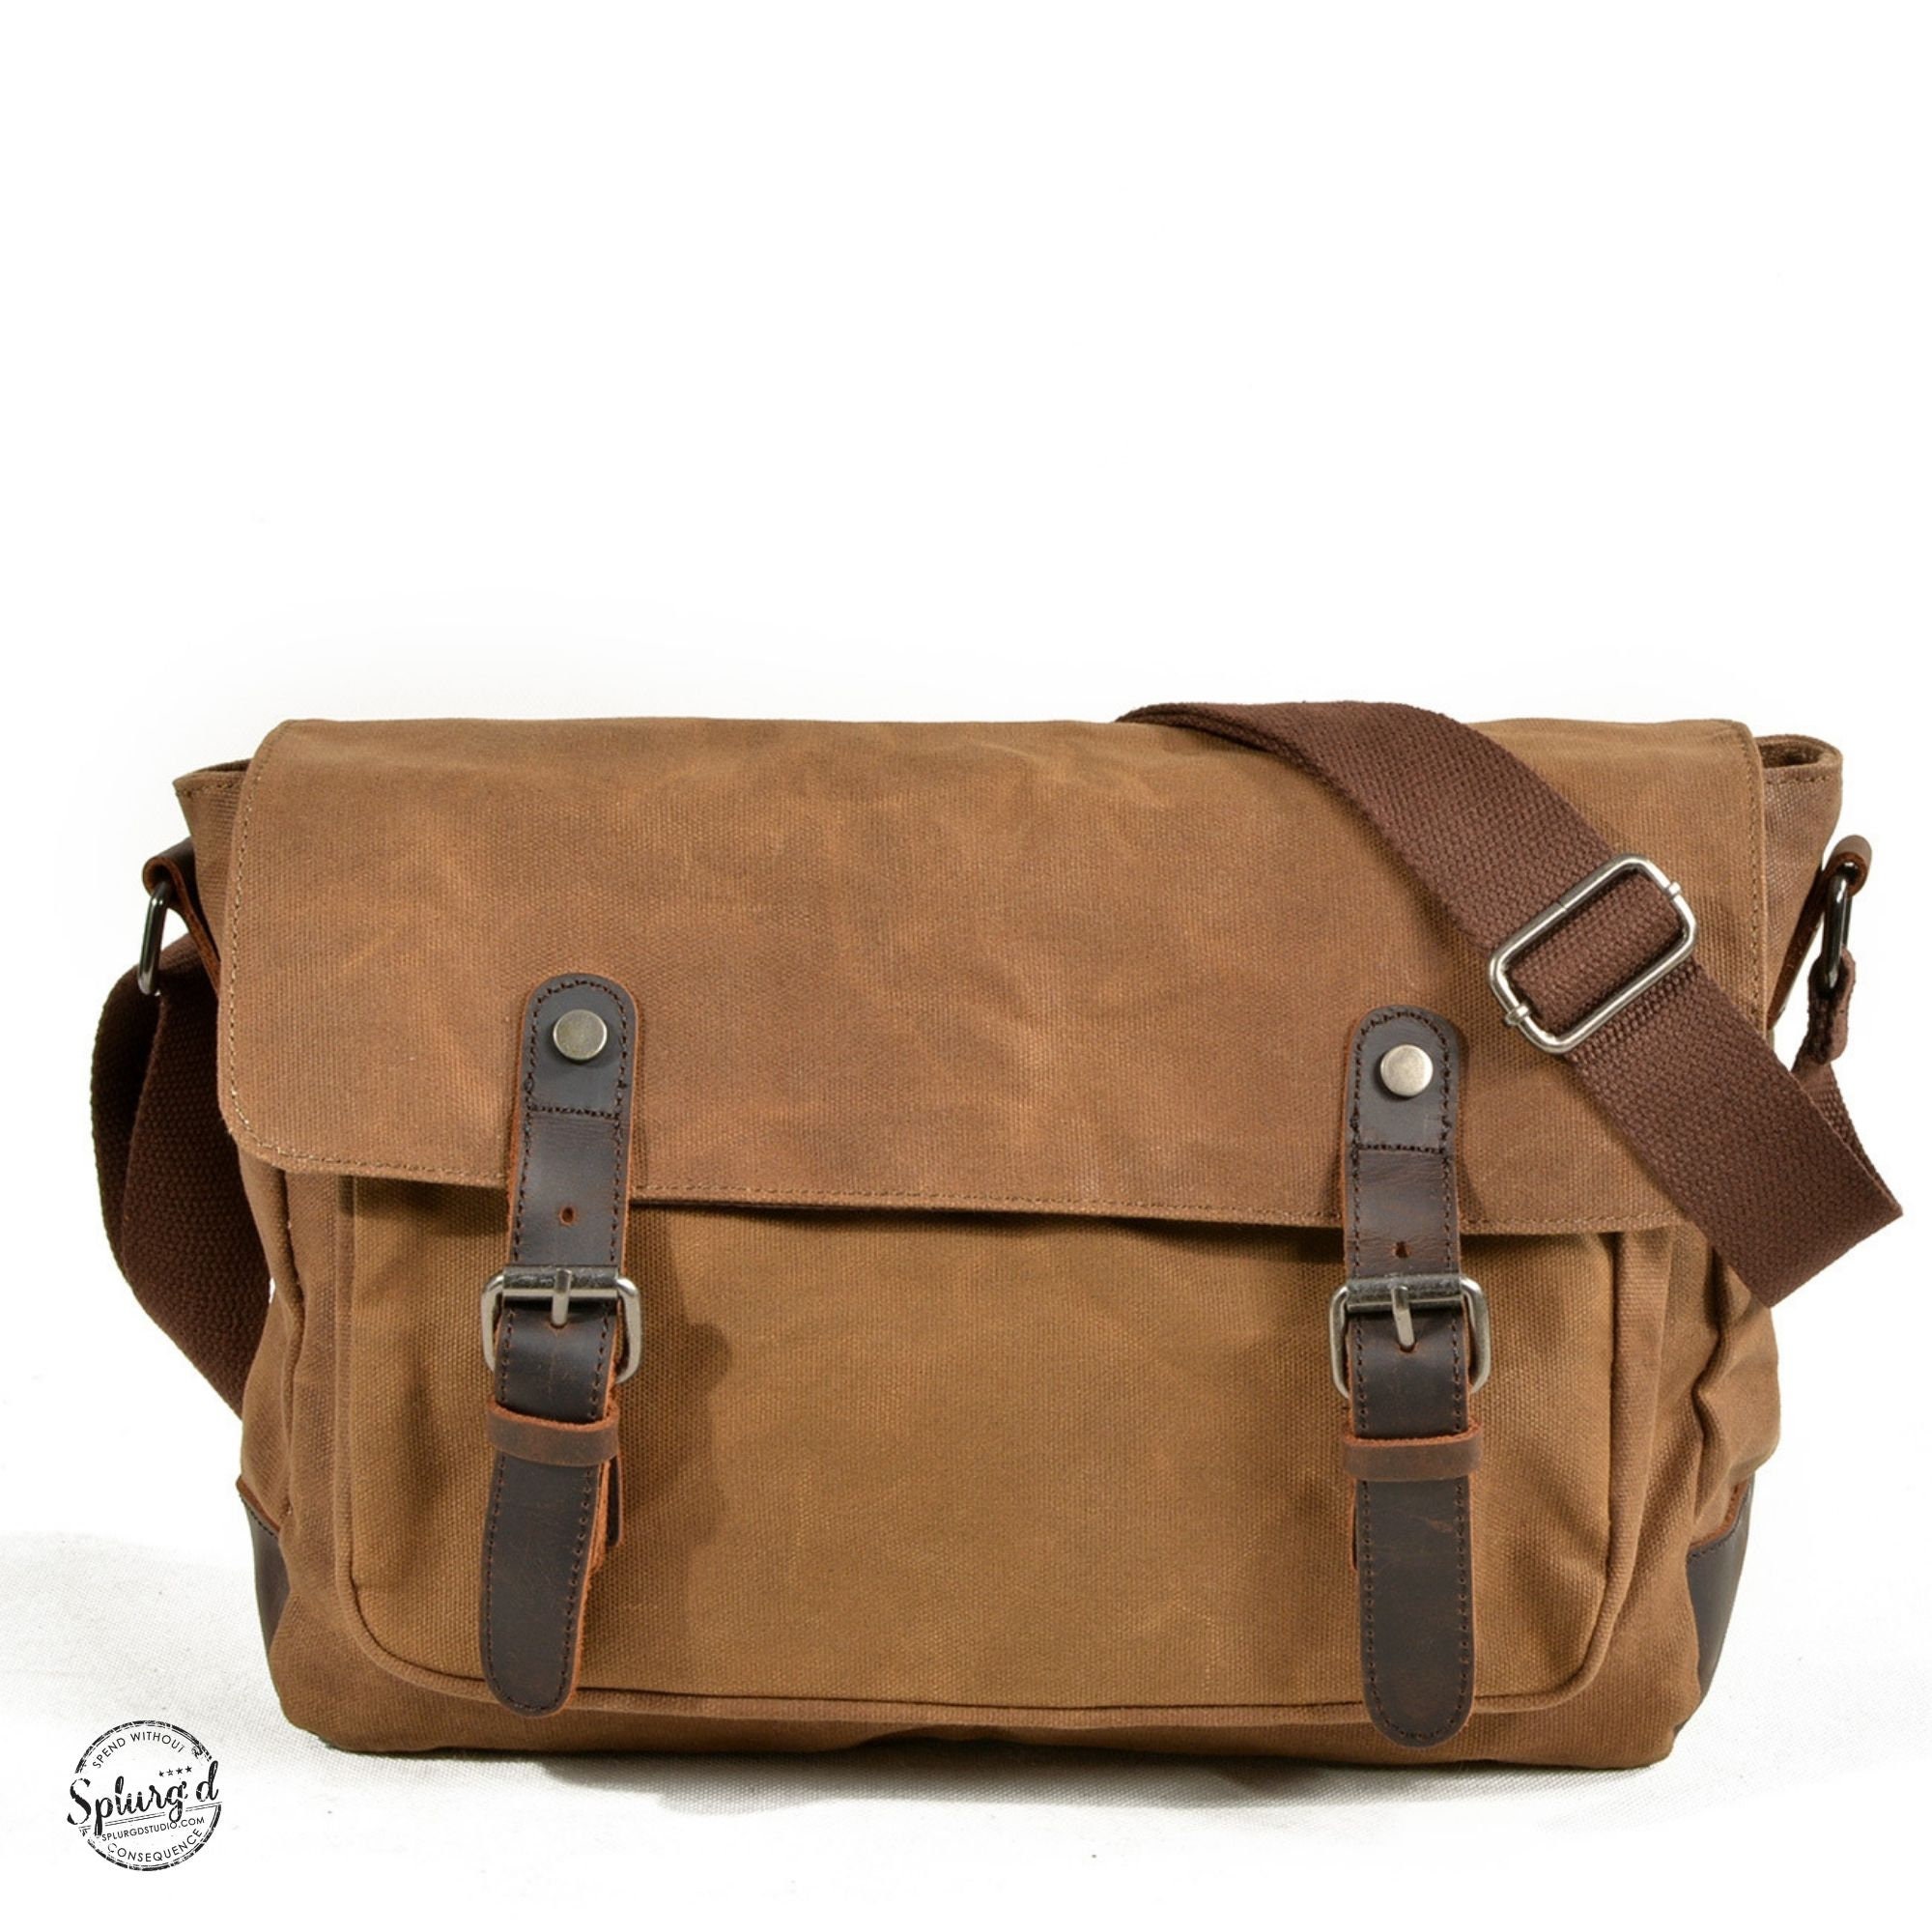 General All purpose Principe Canvas Messenger Bag fits 13, 13.3, 14 inch  bags [Unisex Design]